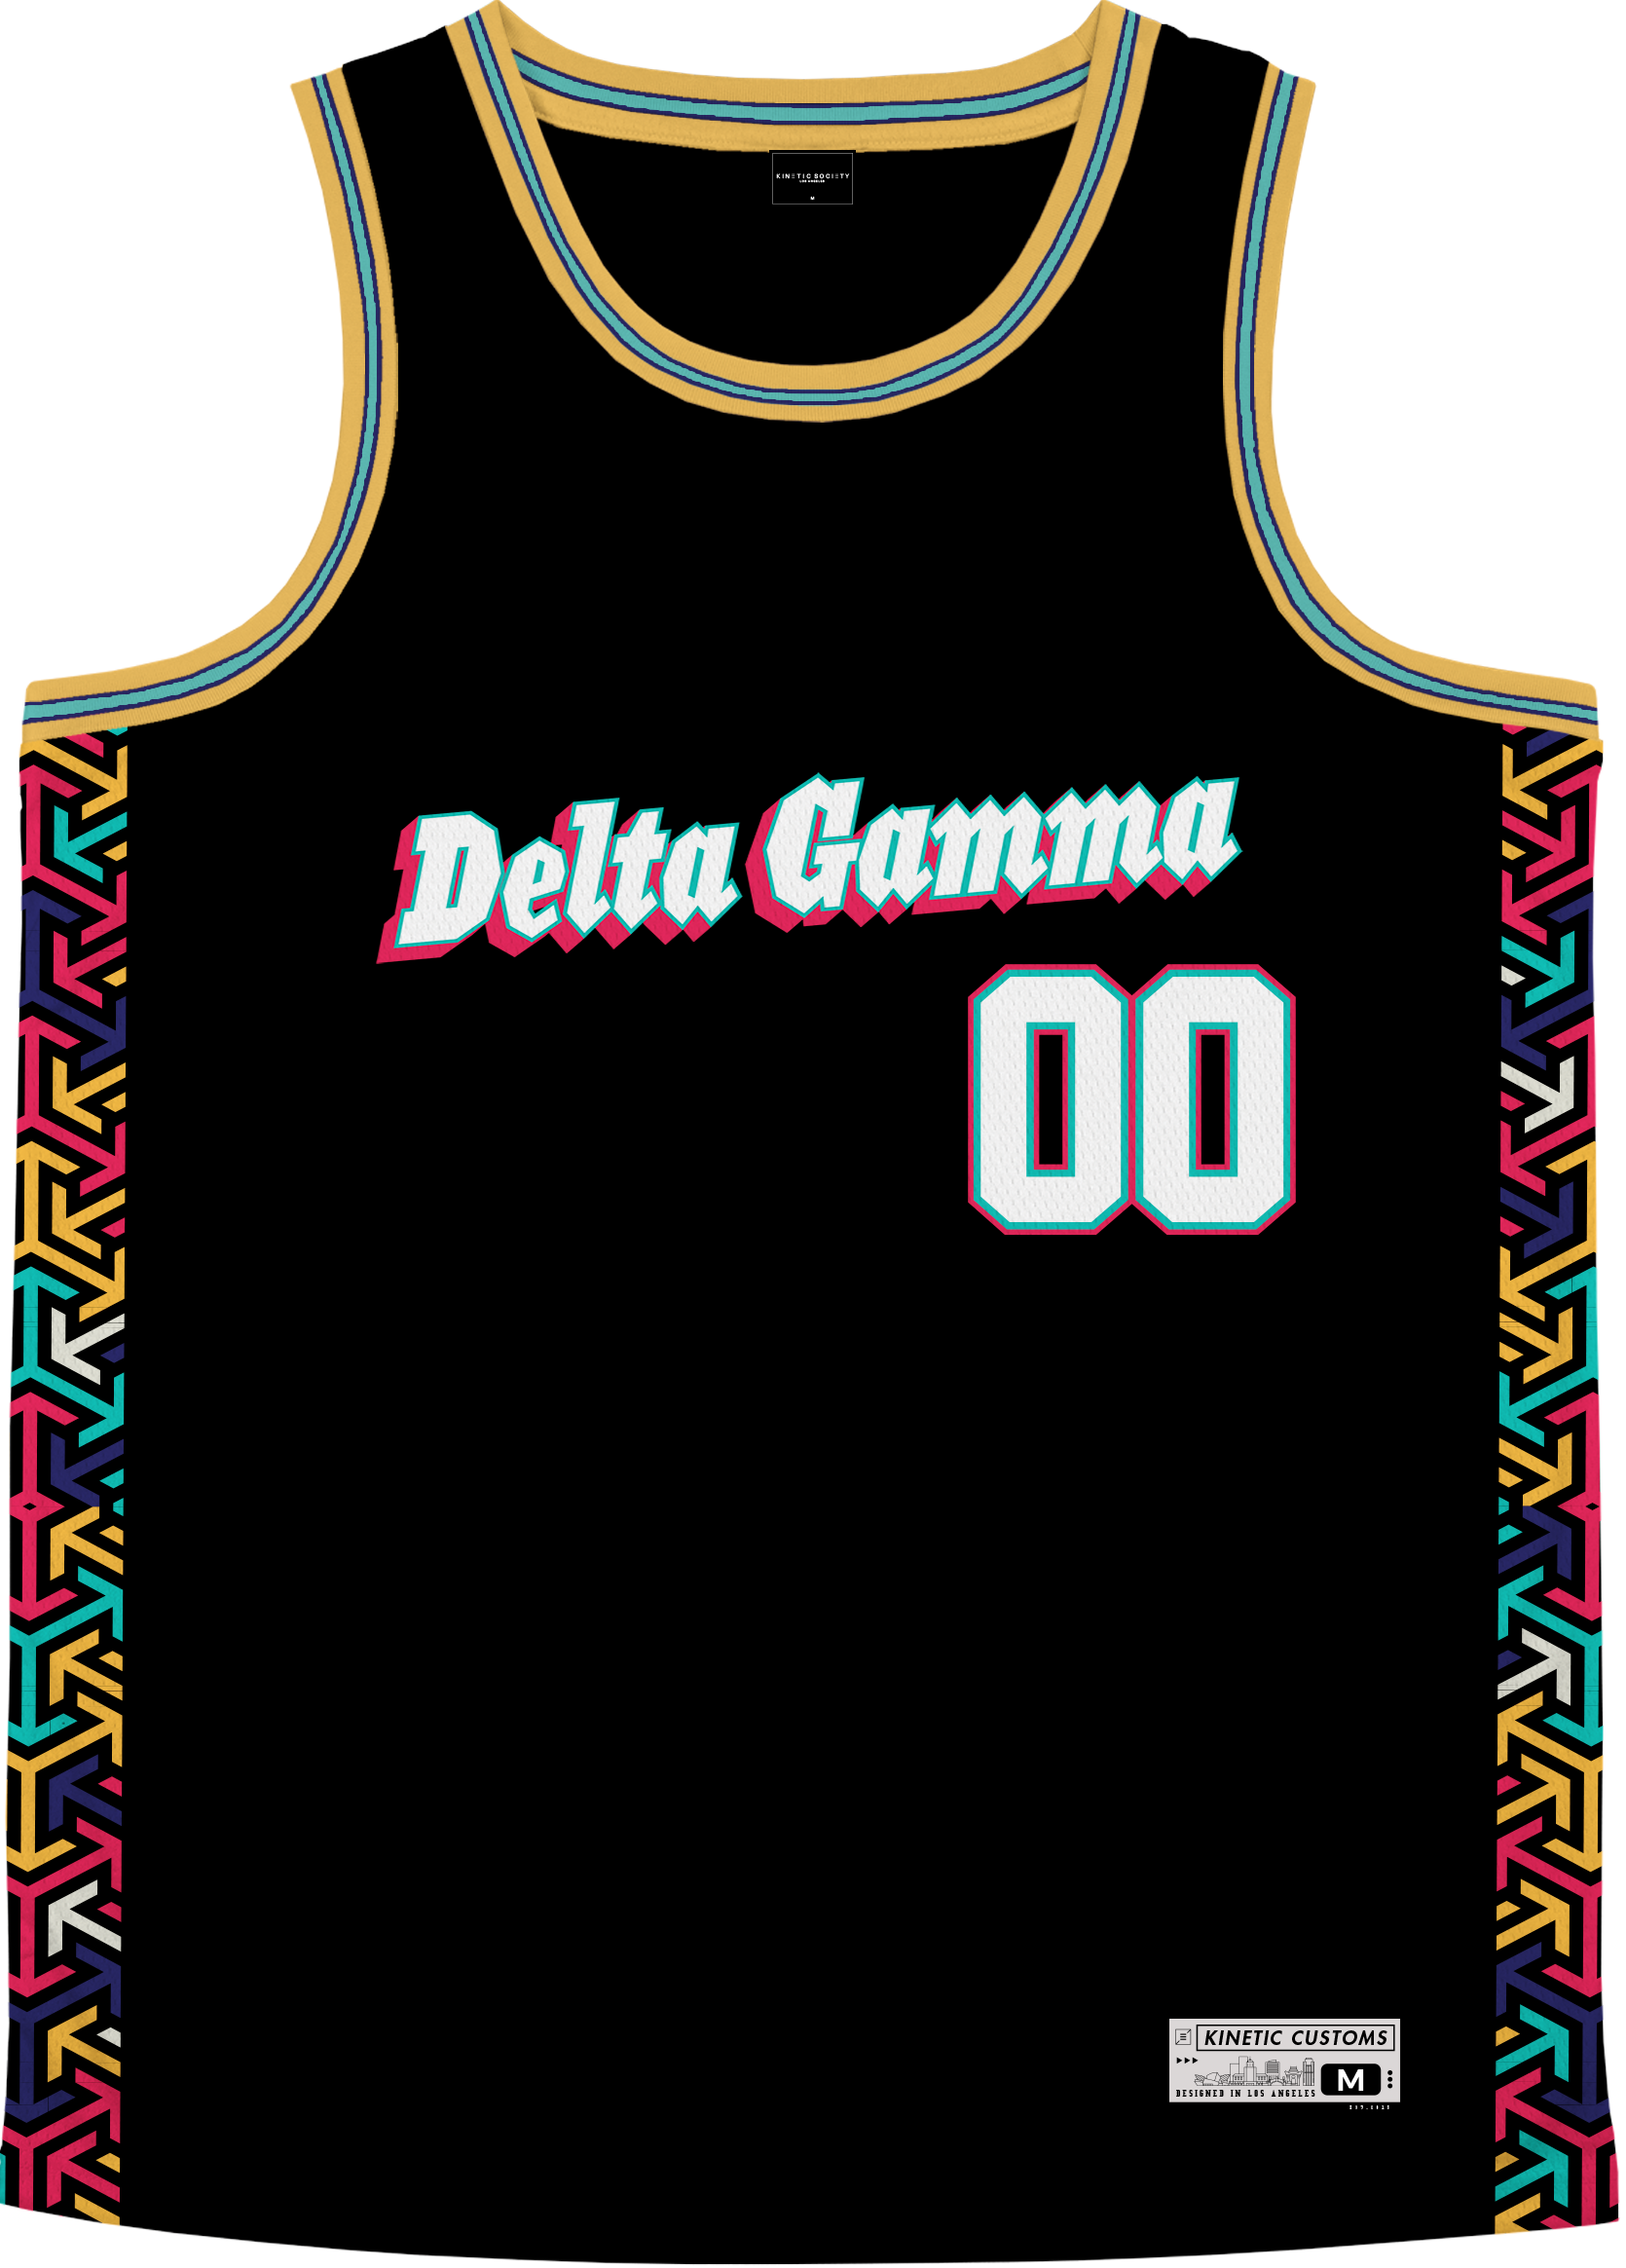 DELTA GAMMA - Cubic Arrows Basketball Jersey